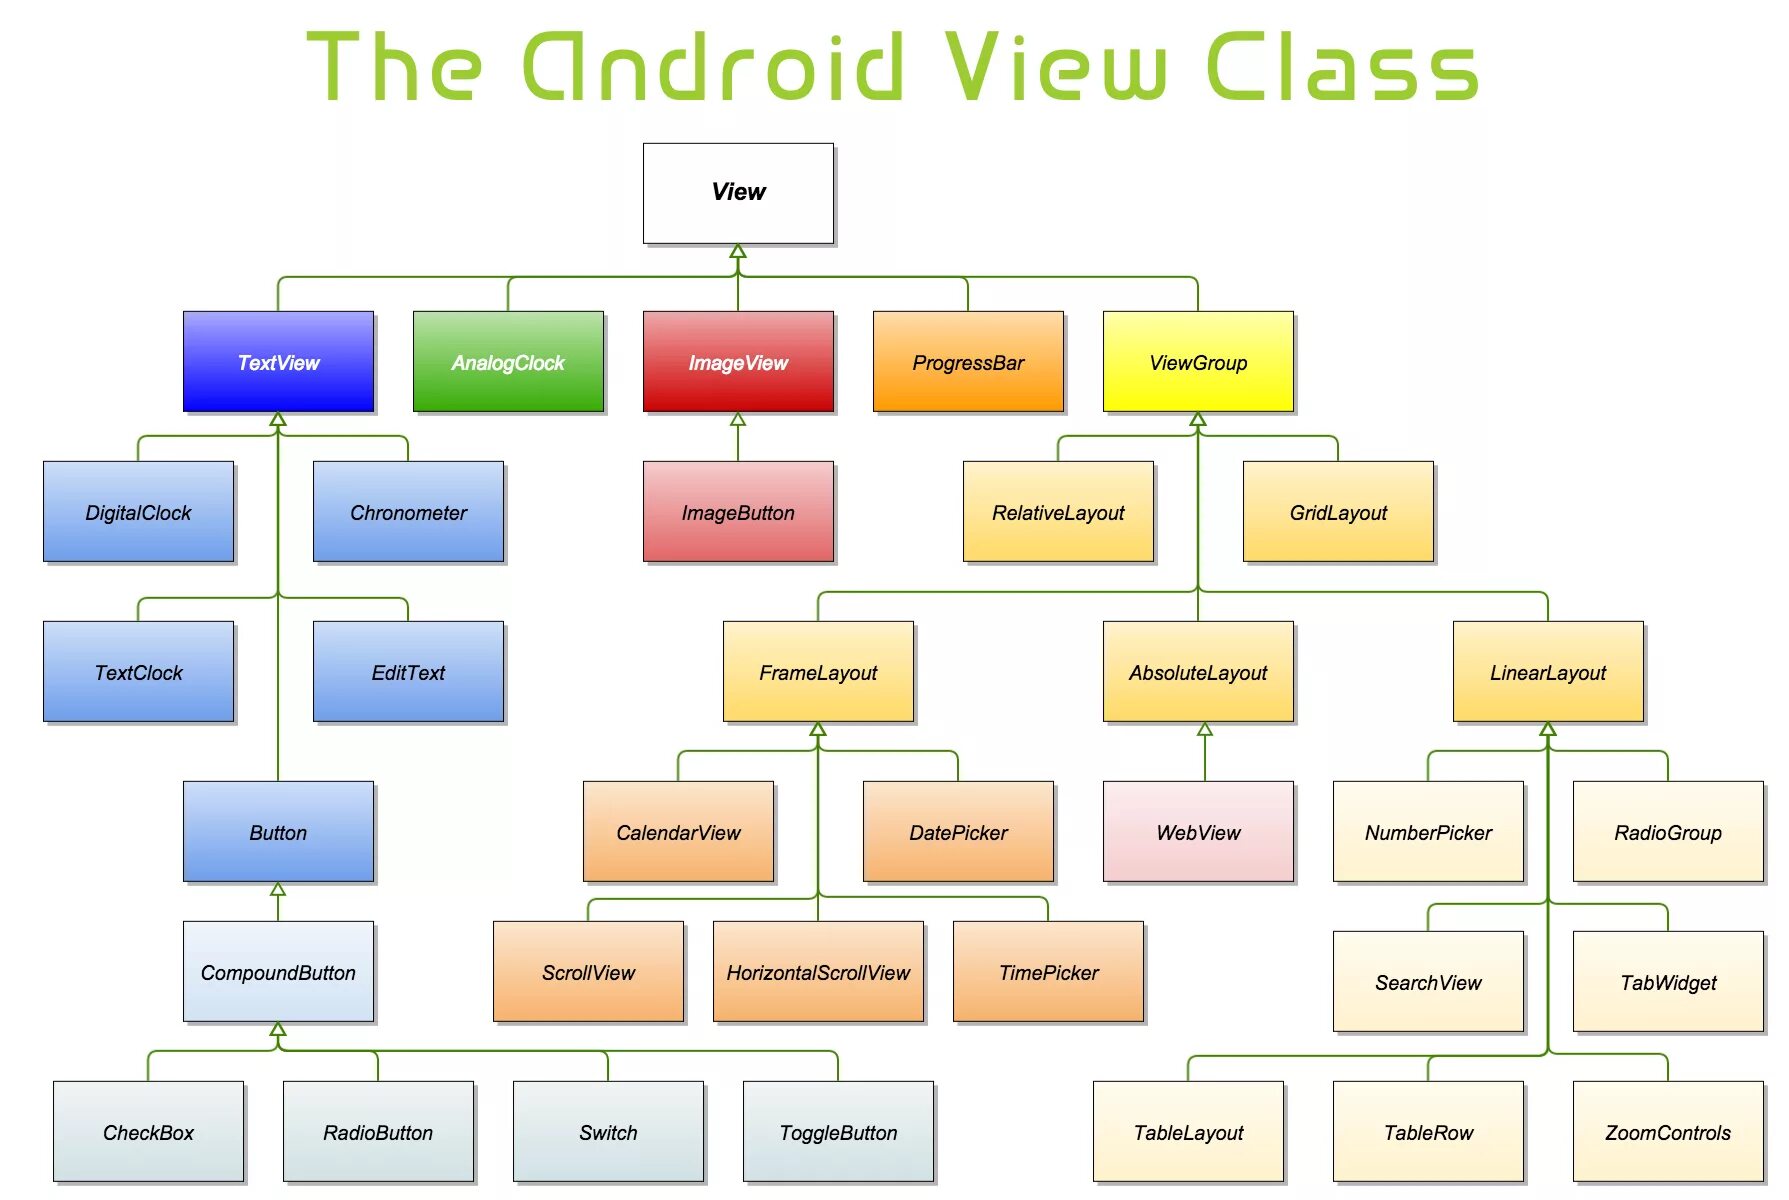 Java views. Иерархия view Android. Иерархия классов Android. Android Studio view класс. Hierarchy view в Android.